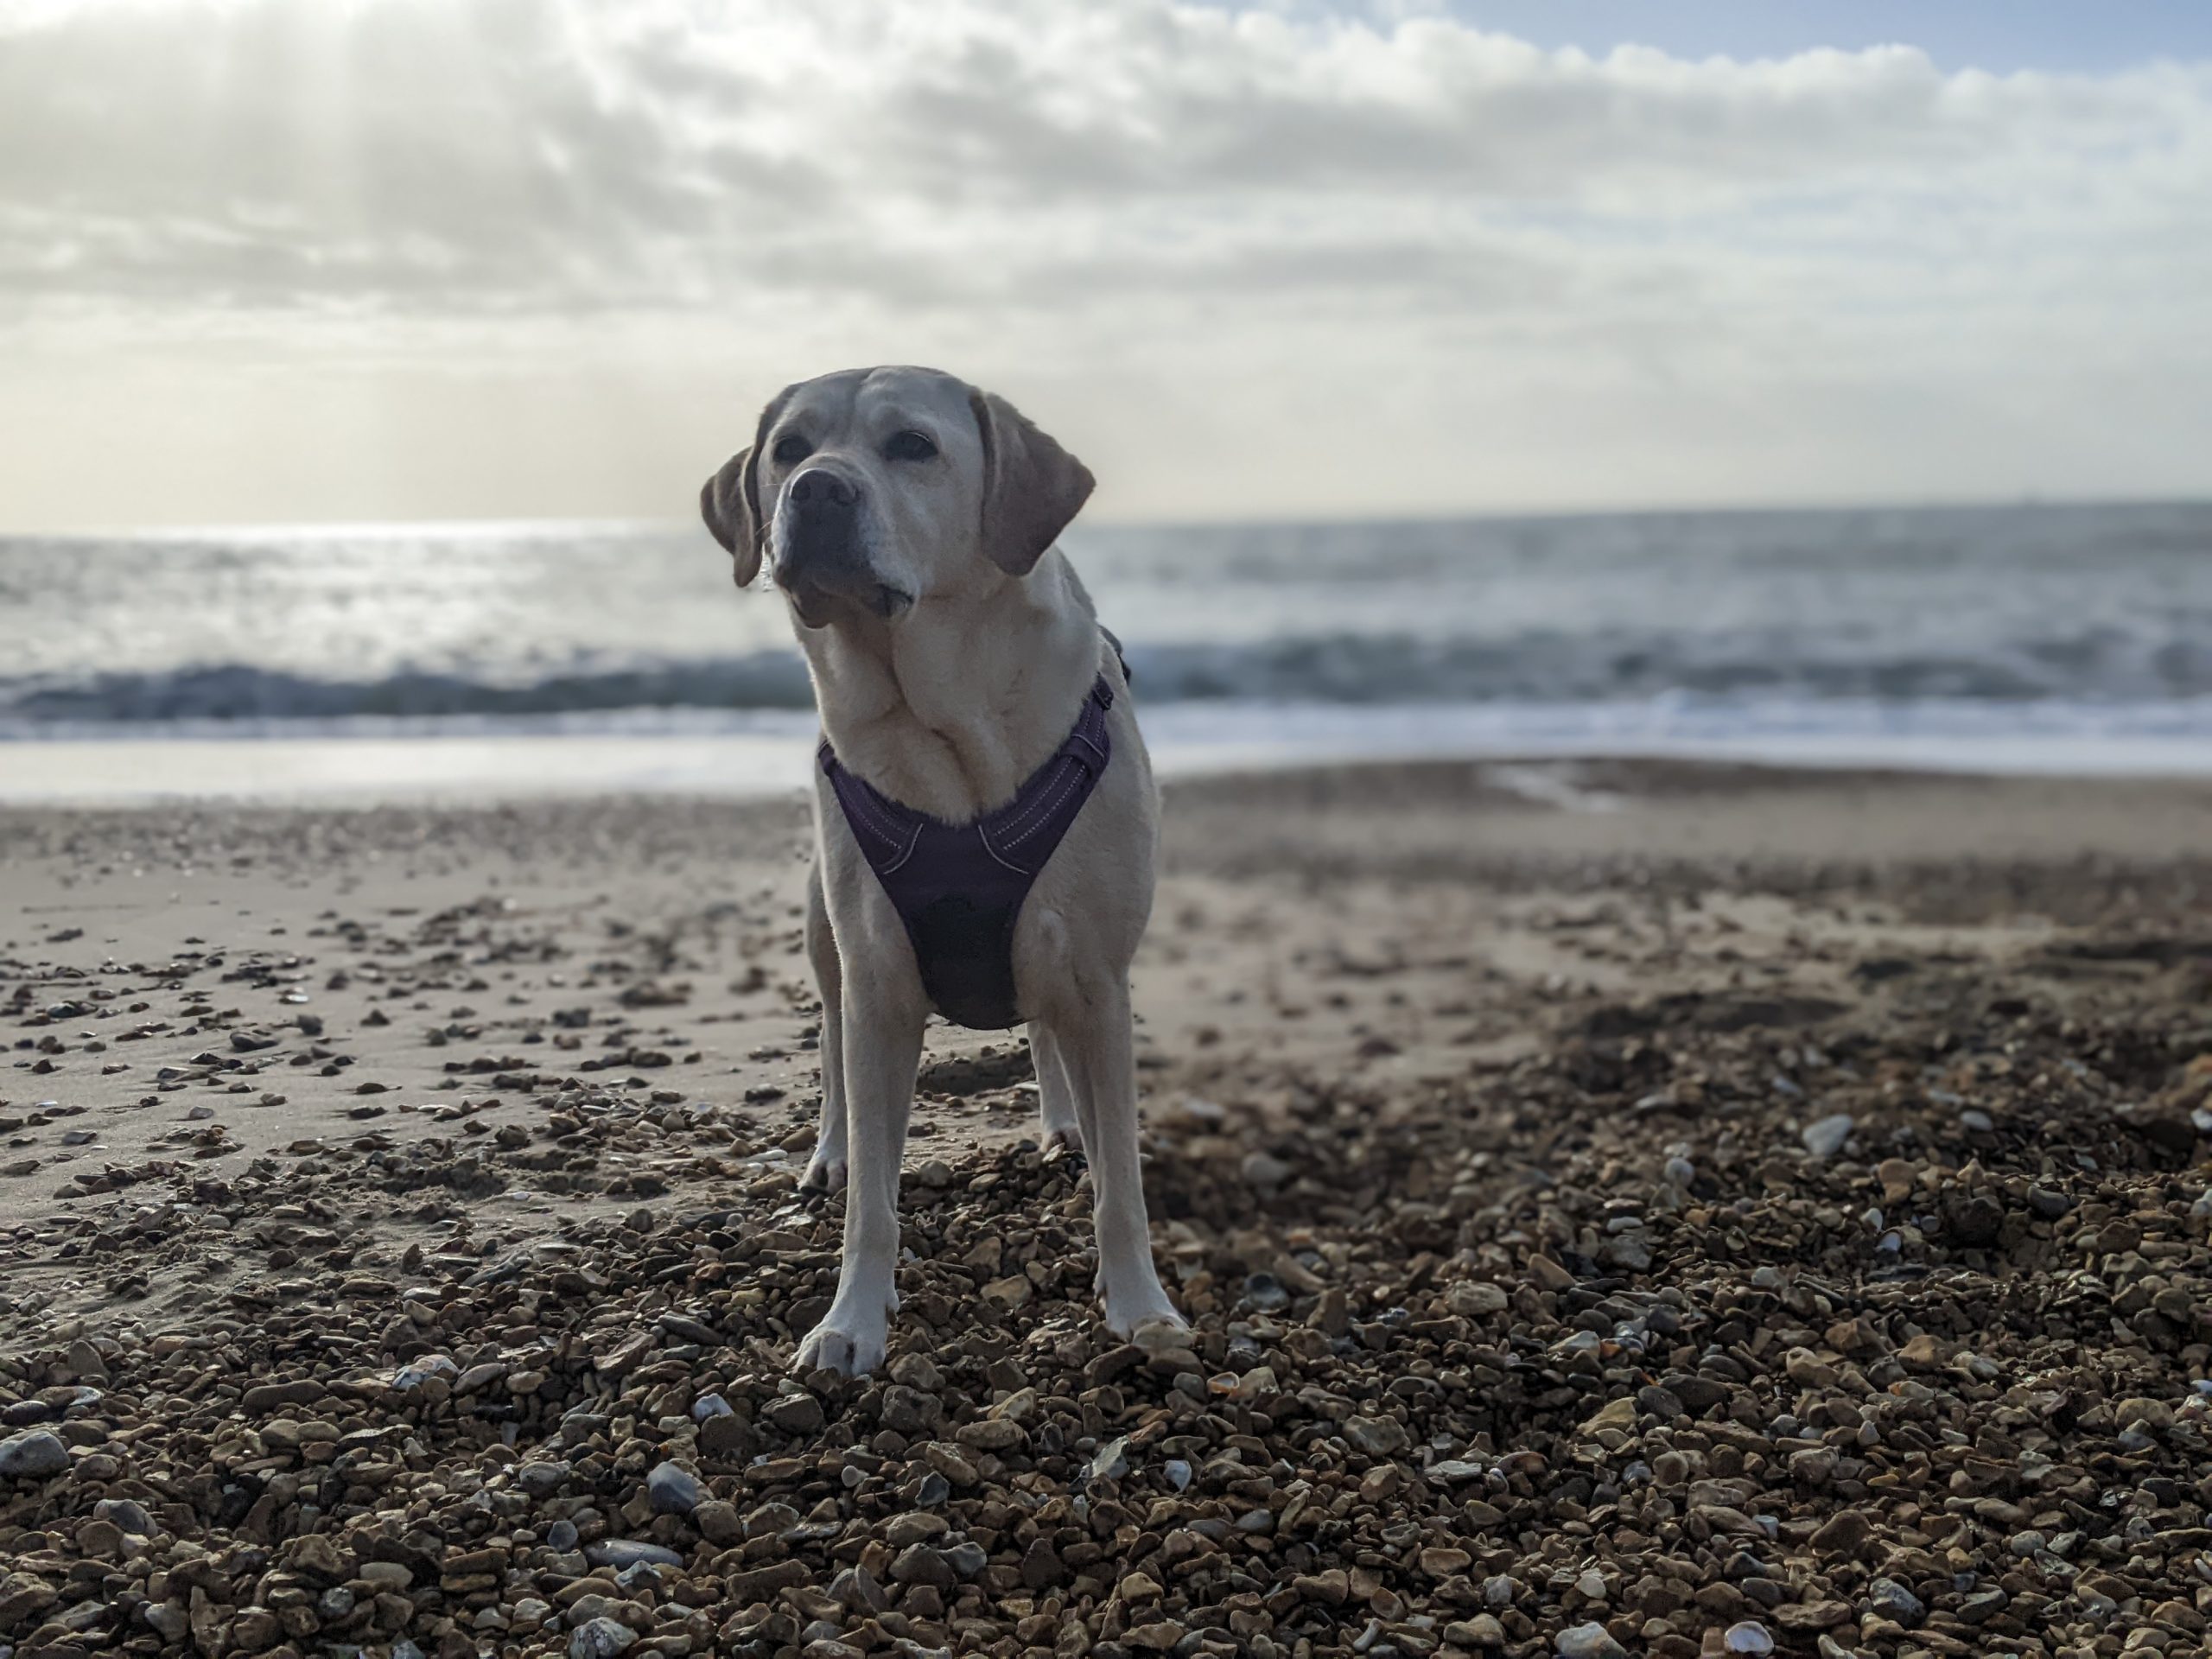 Labrador dog standing on pebble beach, moody sky.